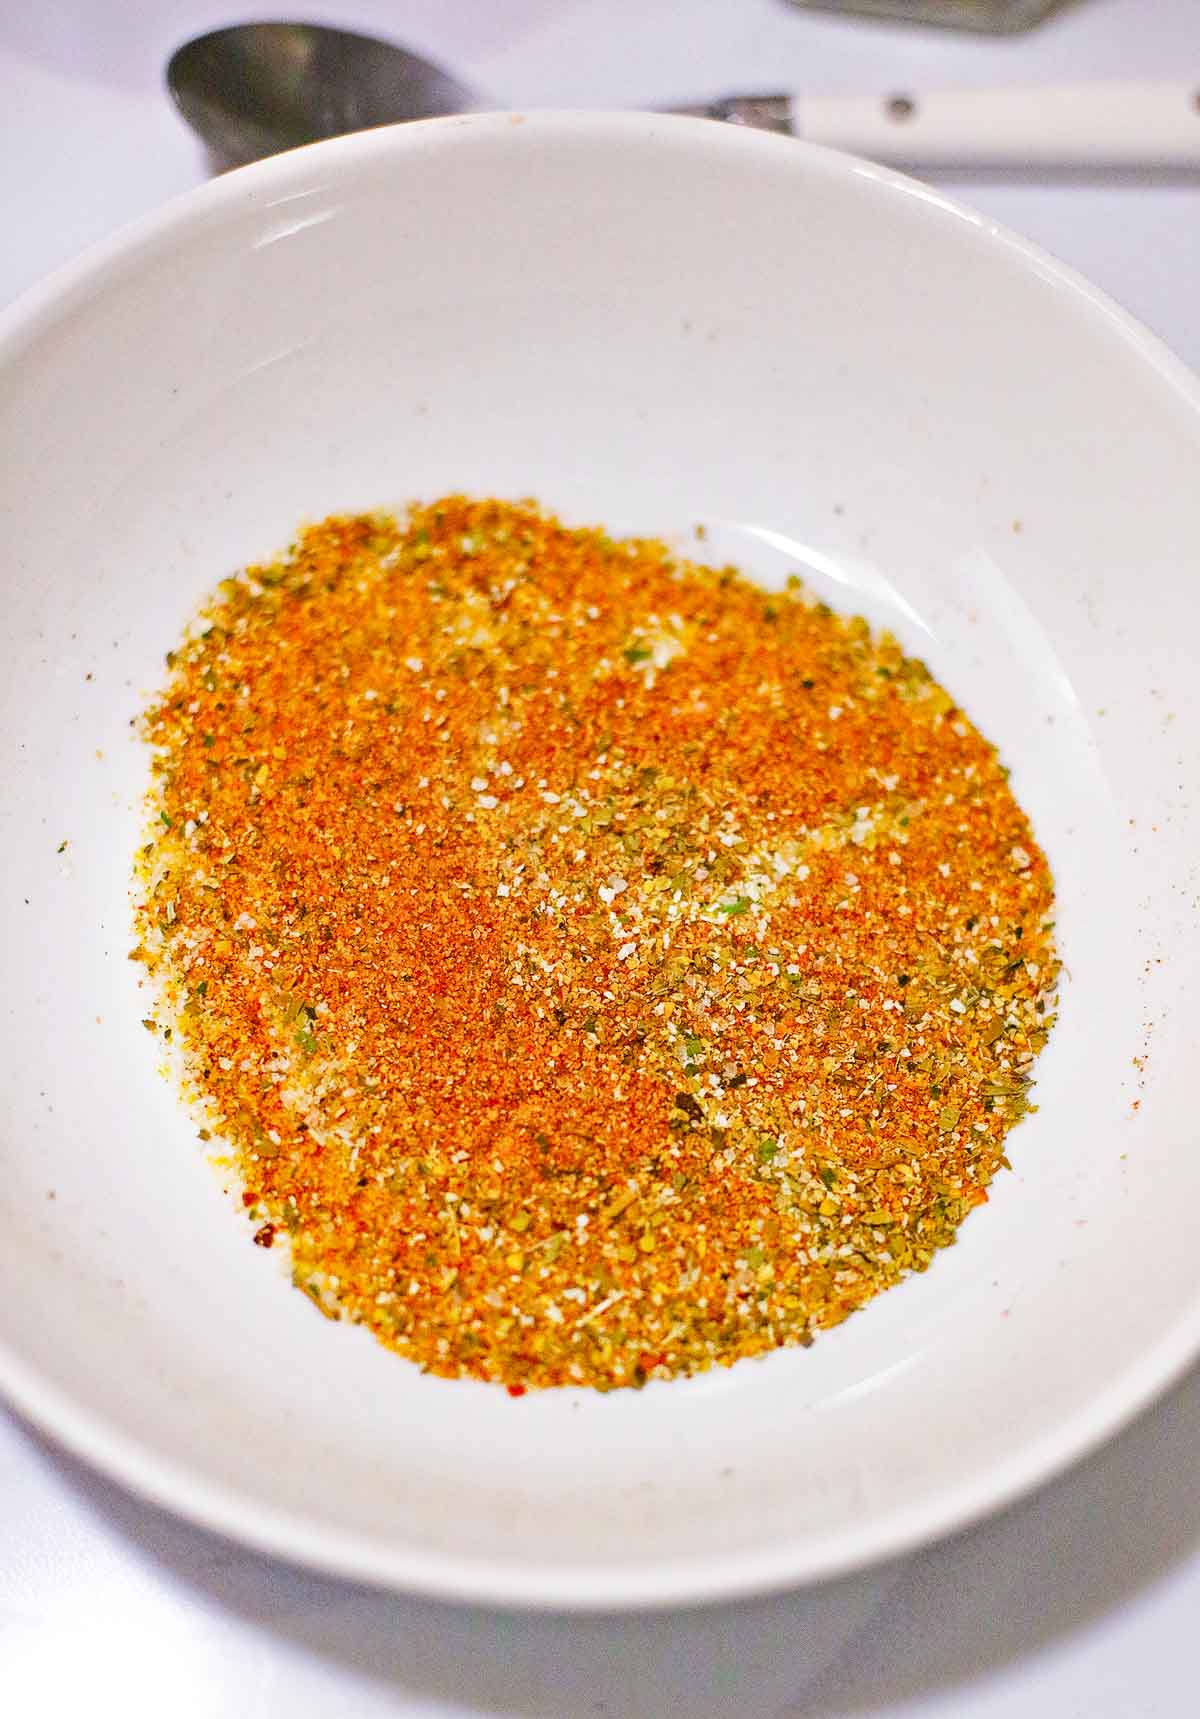 Seasoning mixture in a small bowl